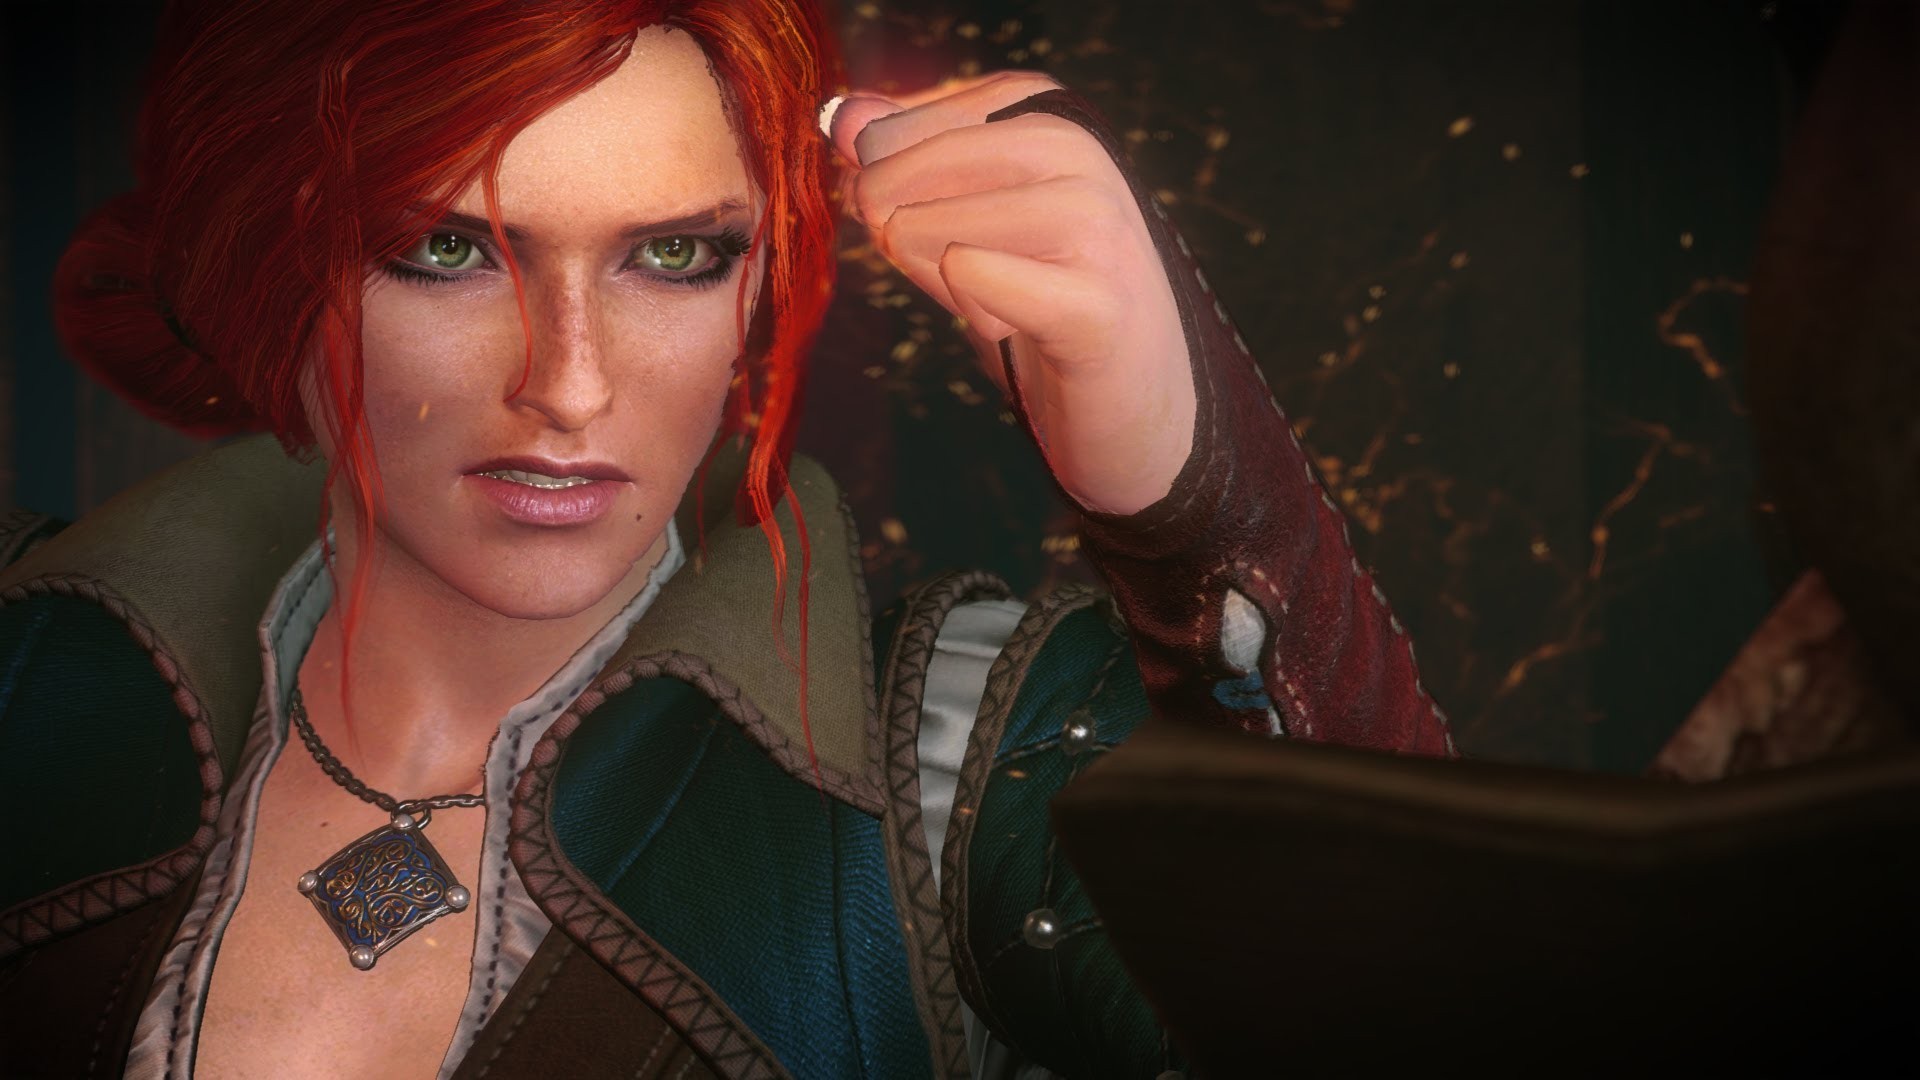 General 1920x1080 The Witcher 3: Wild Hunt Triss Merigold green eyes video games PC gaming redhead women fantasy art fantasy girl necklace video game girls screen shot